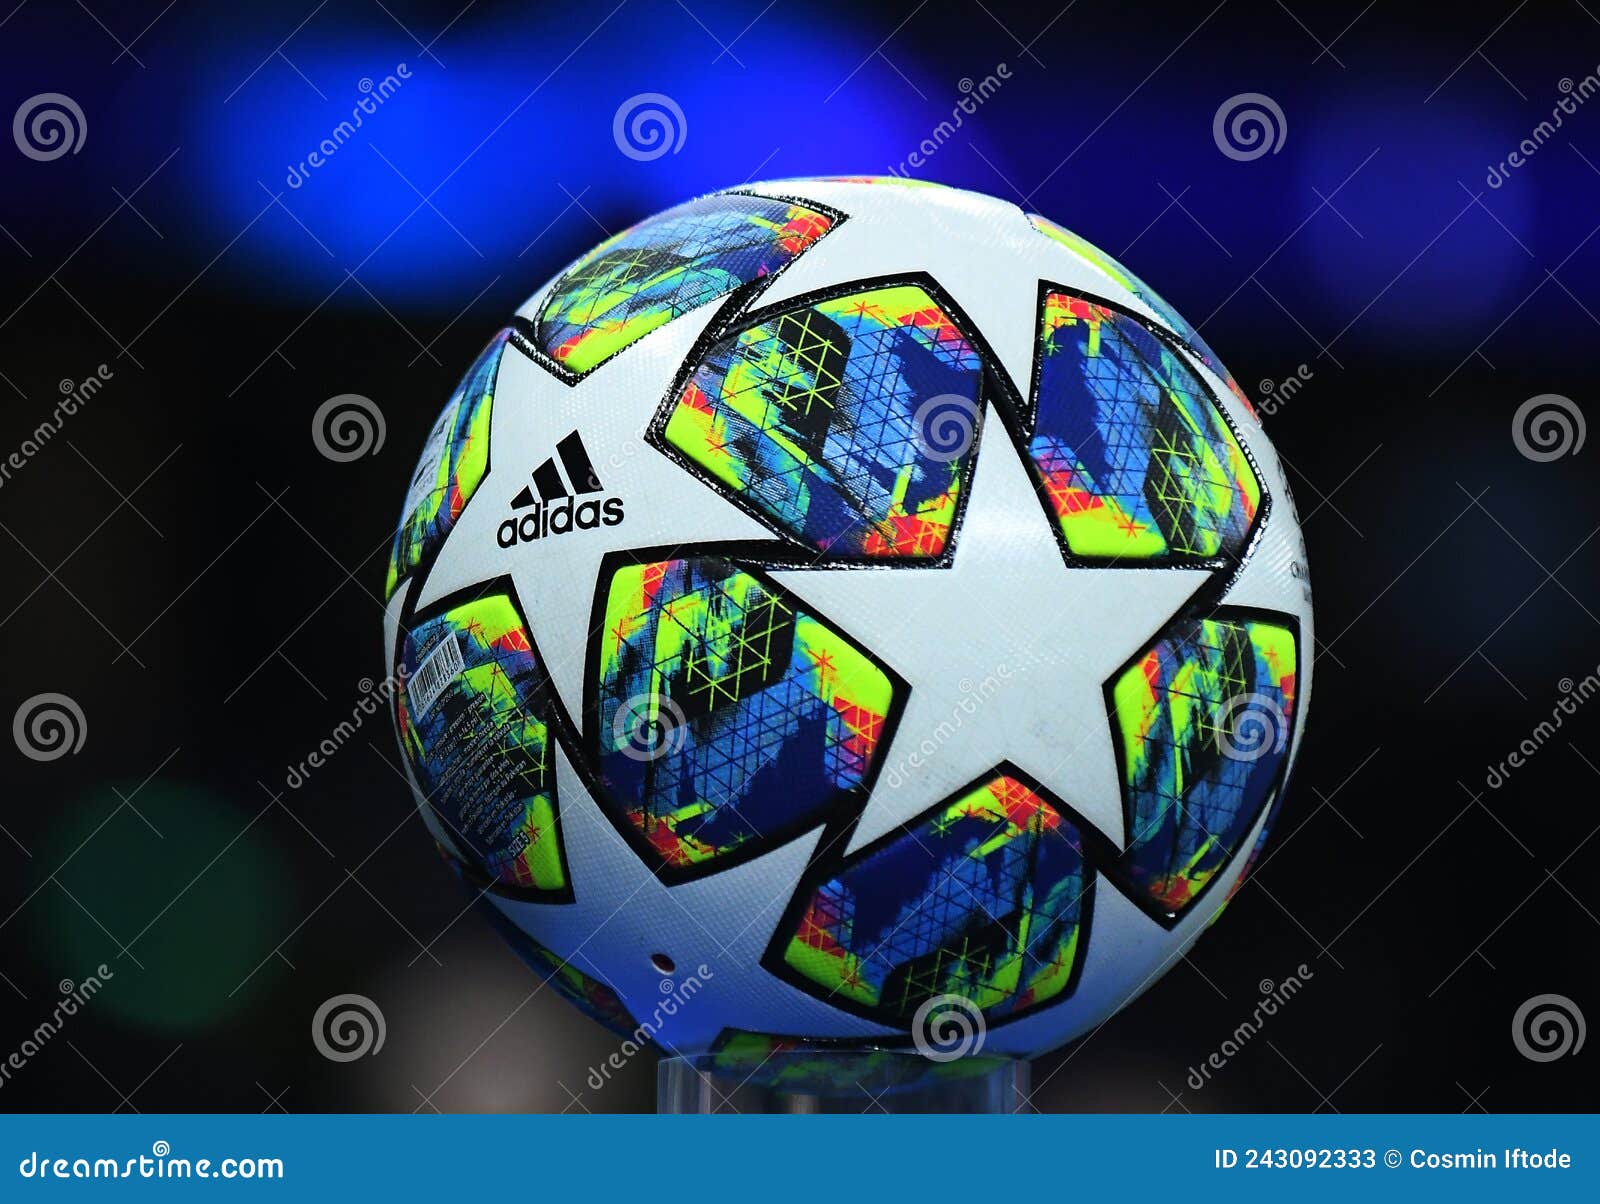 Der Offizielle Uefa Champion Liga-Ball Redaktionelles Stockfoto